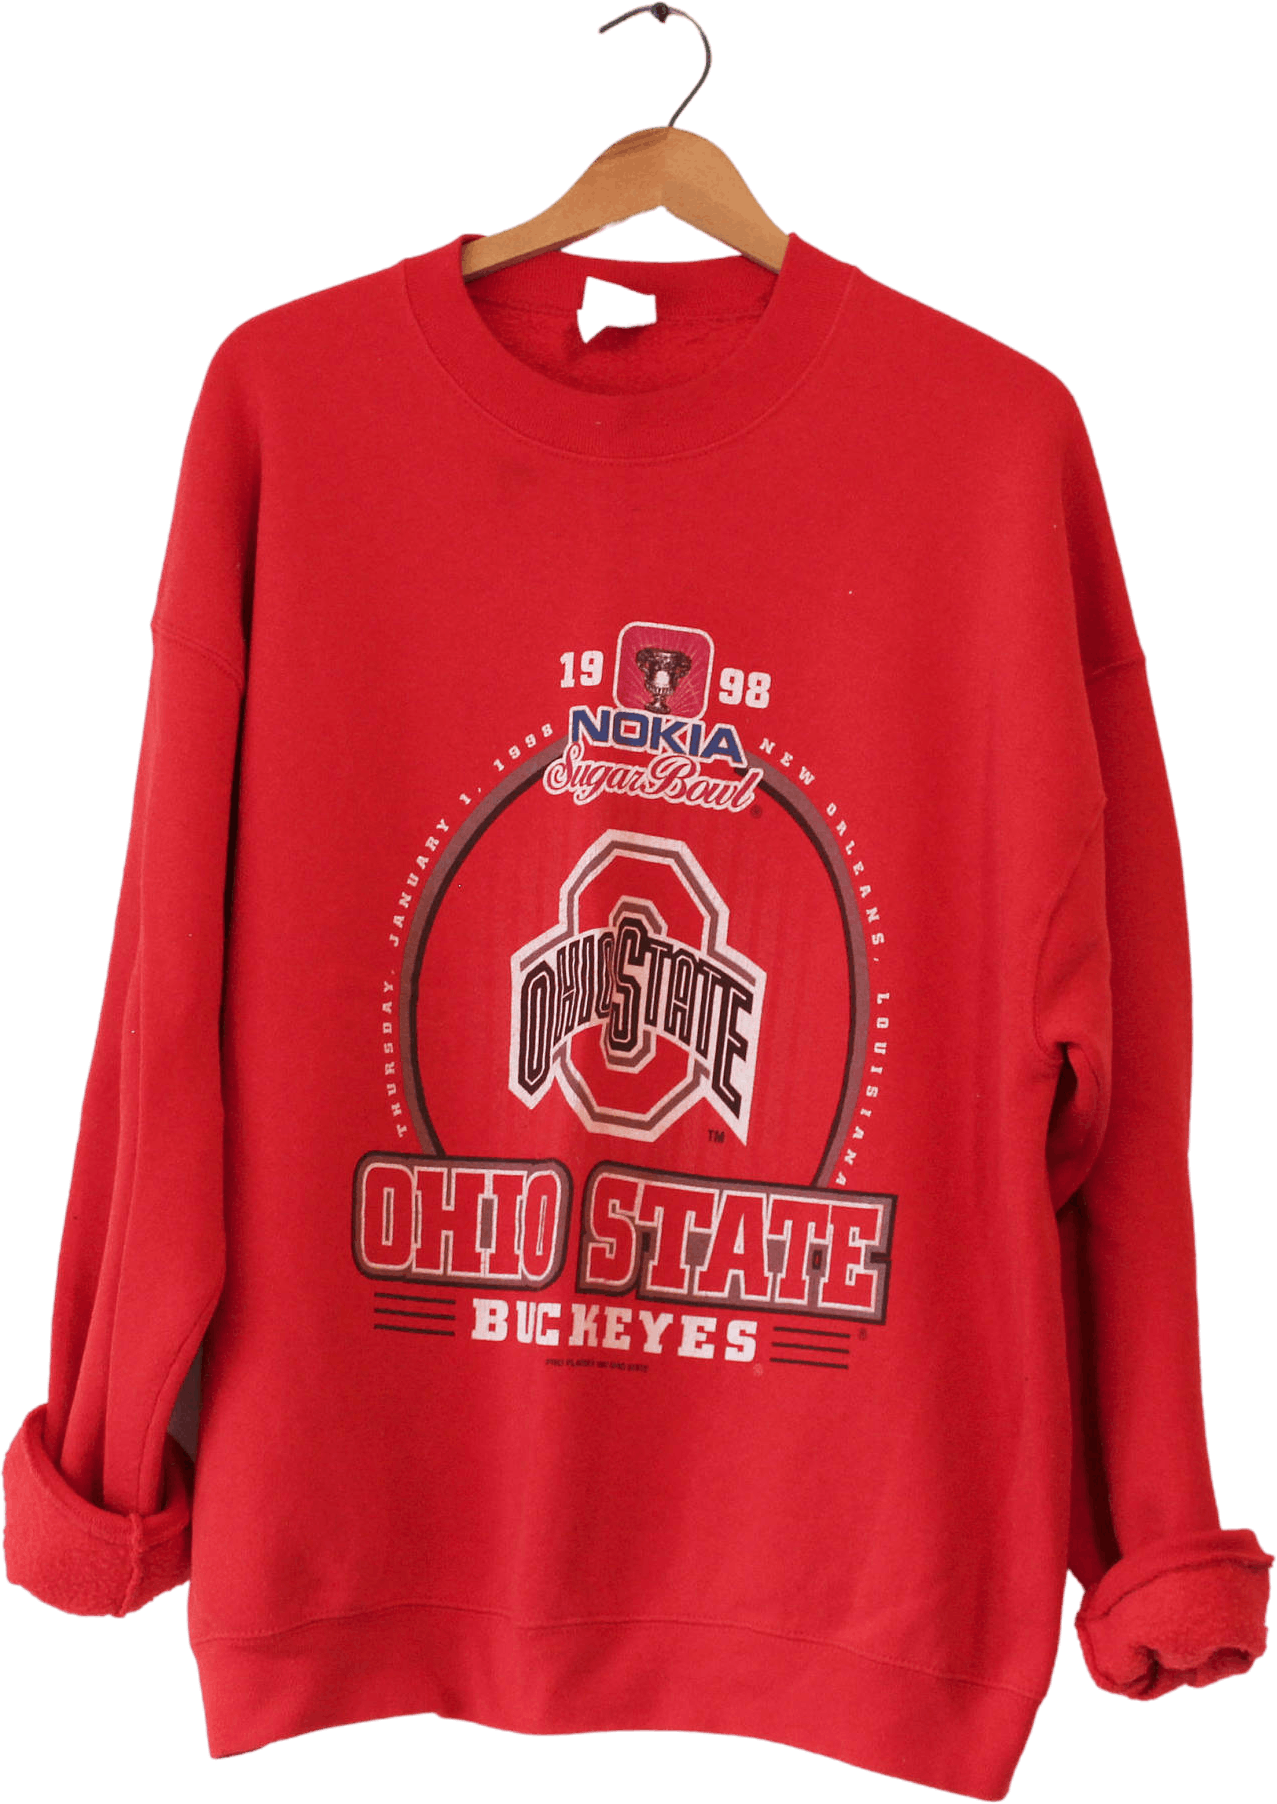 Vintage 90's Red Ohio State University Sweatshirt by Artex | Shop THRILLING